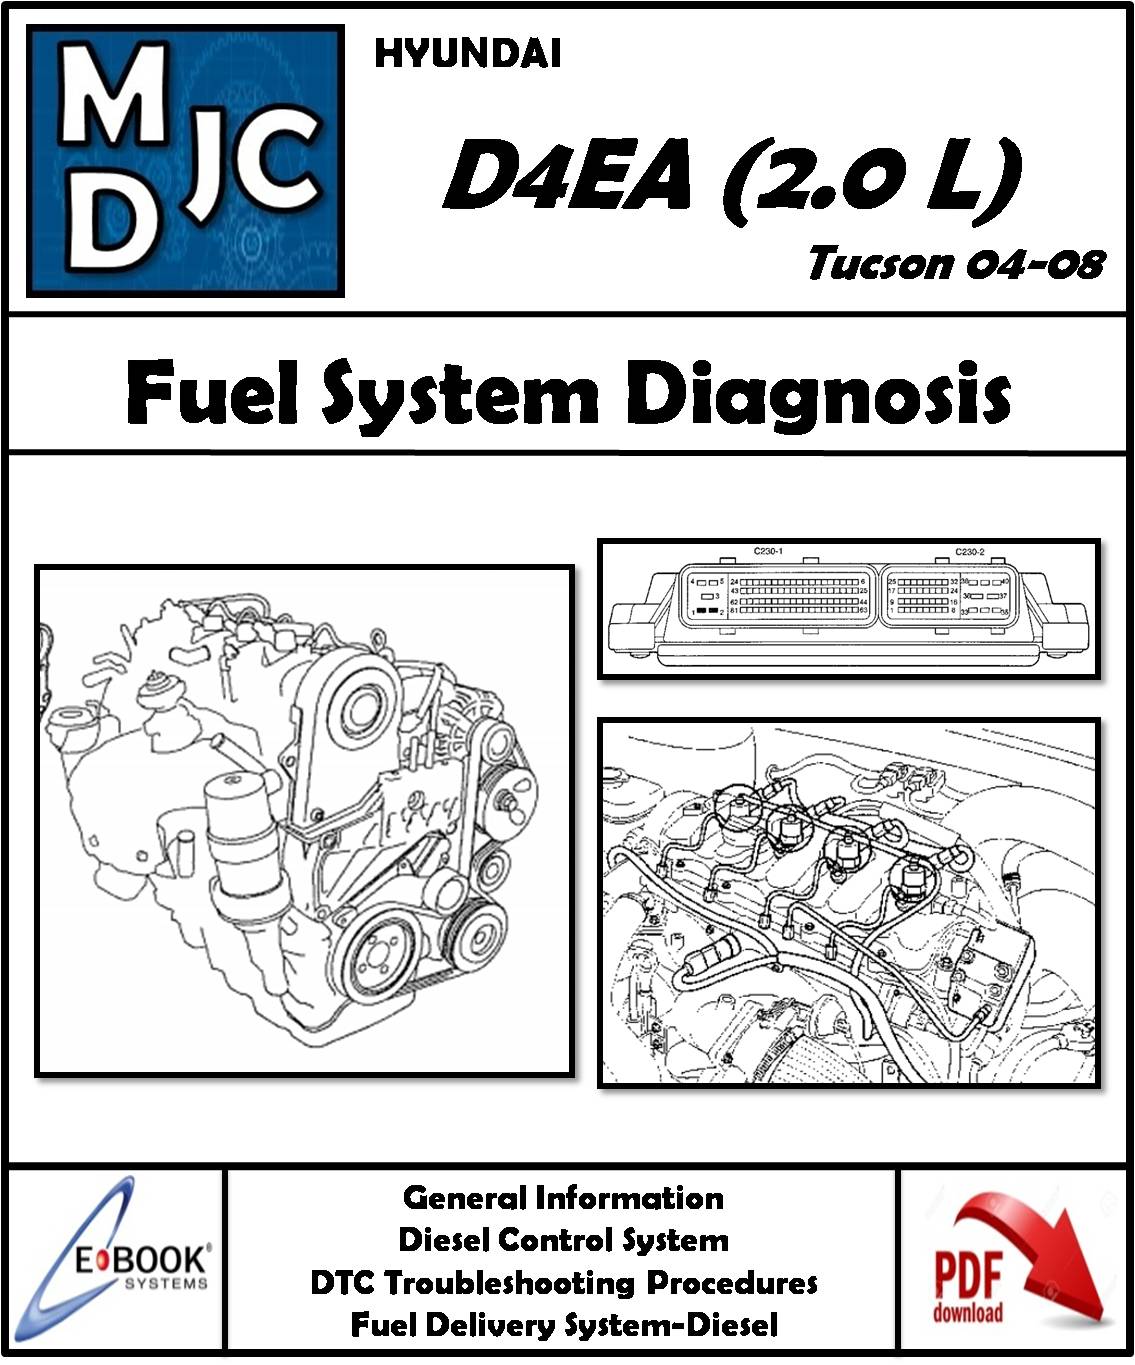 Hyundai D4EA Diesel 2.0 L Sohc ( Tucson 04-08 )